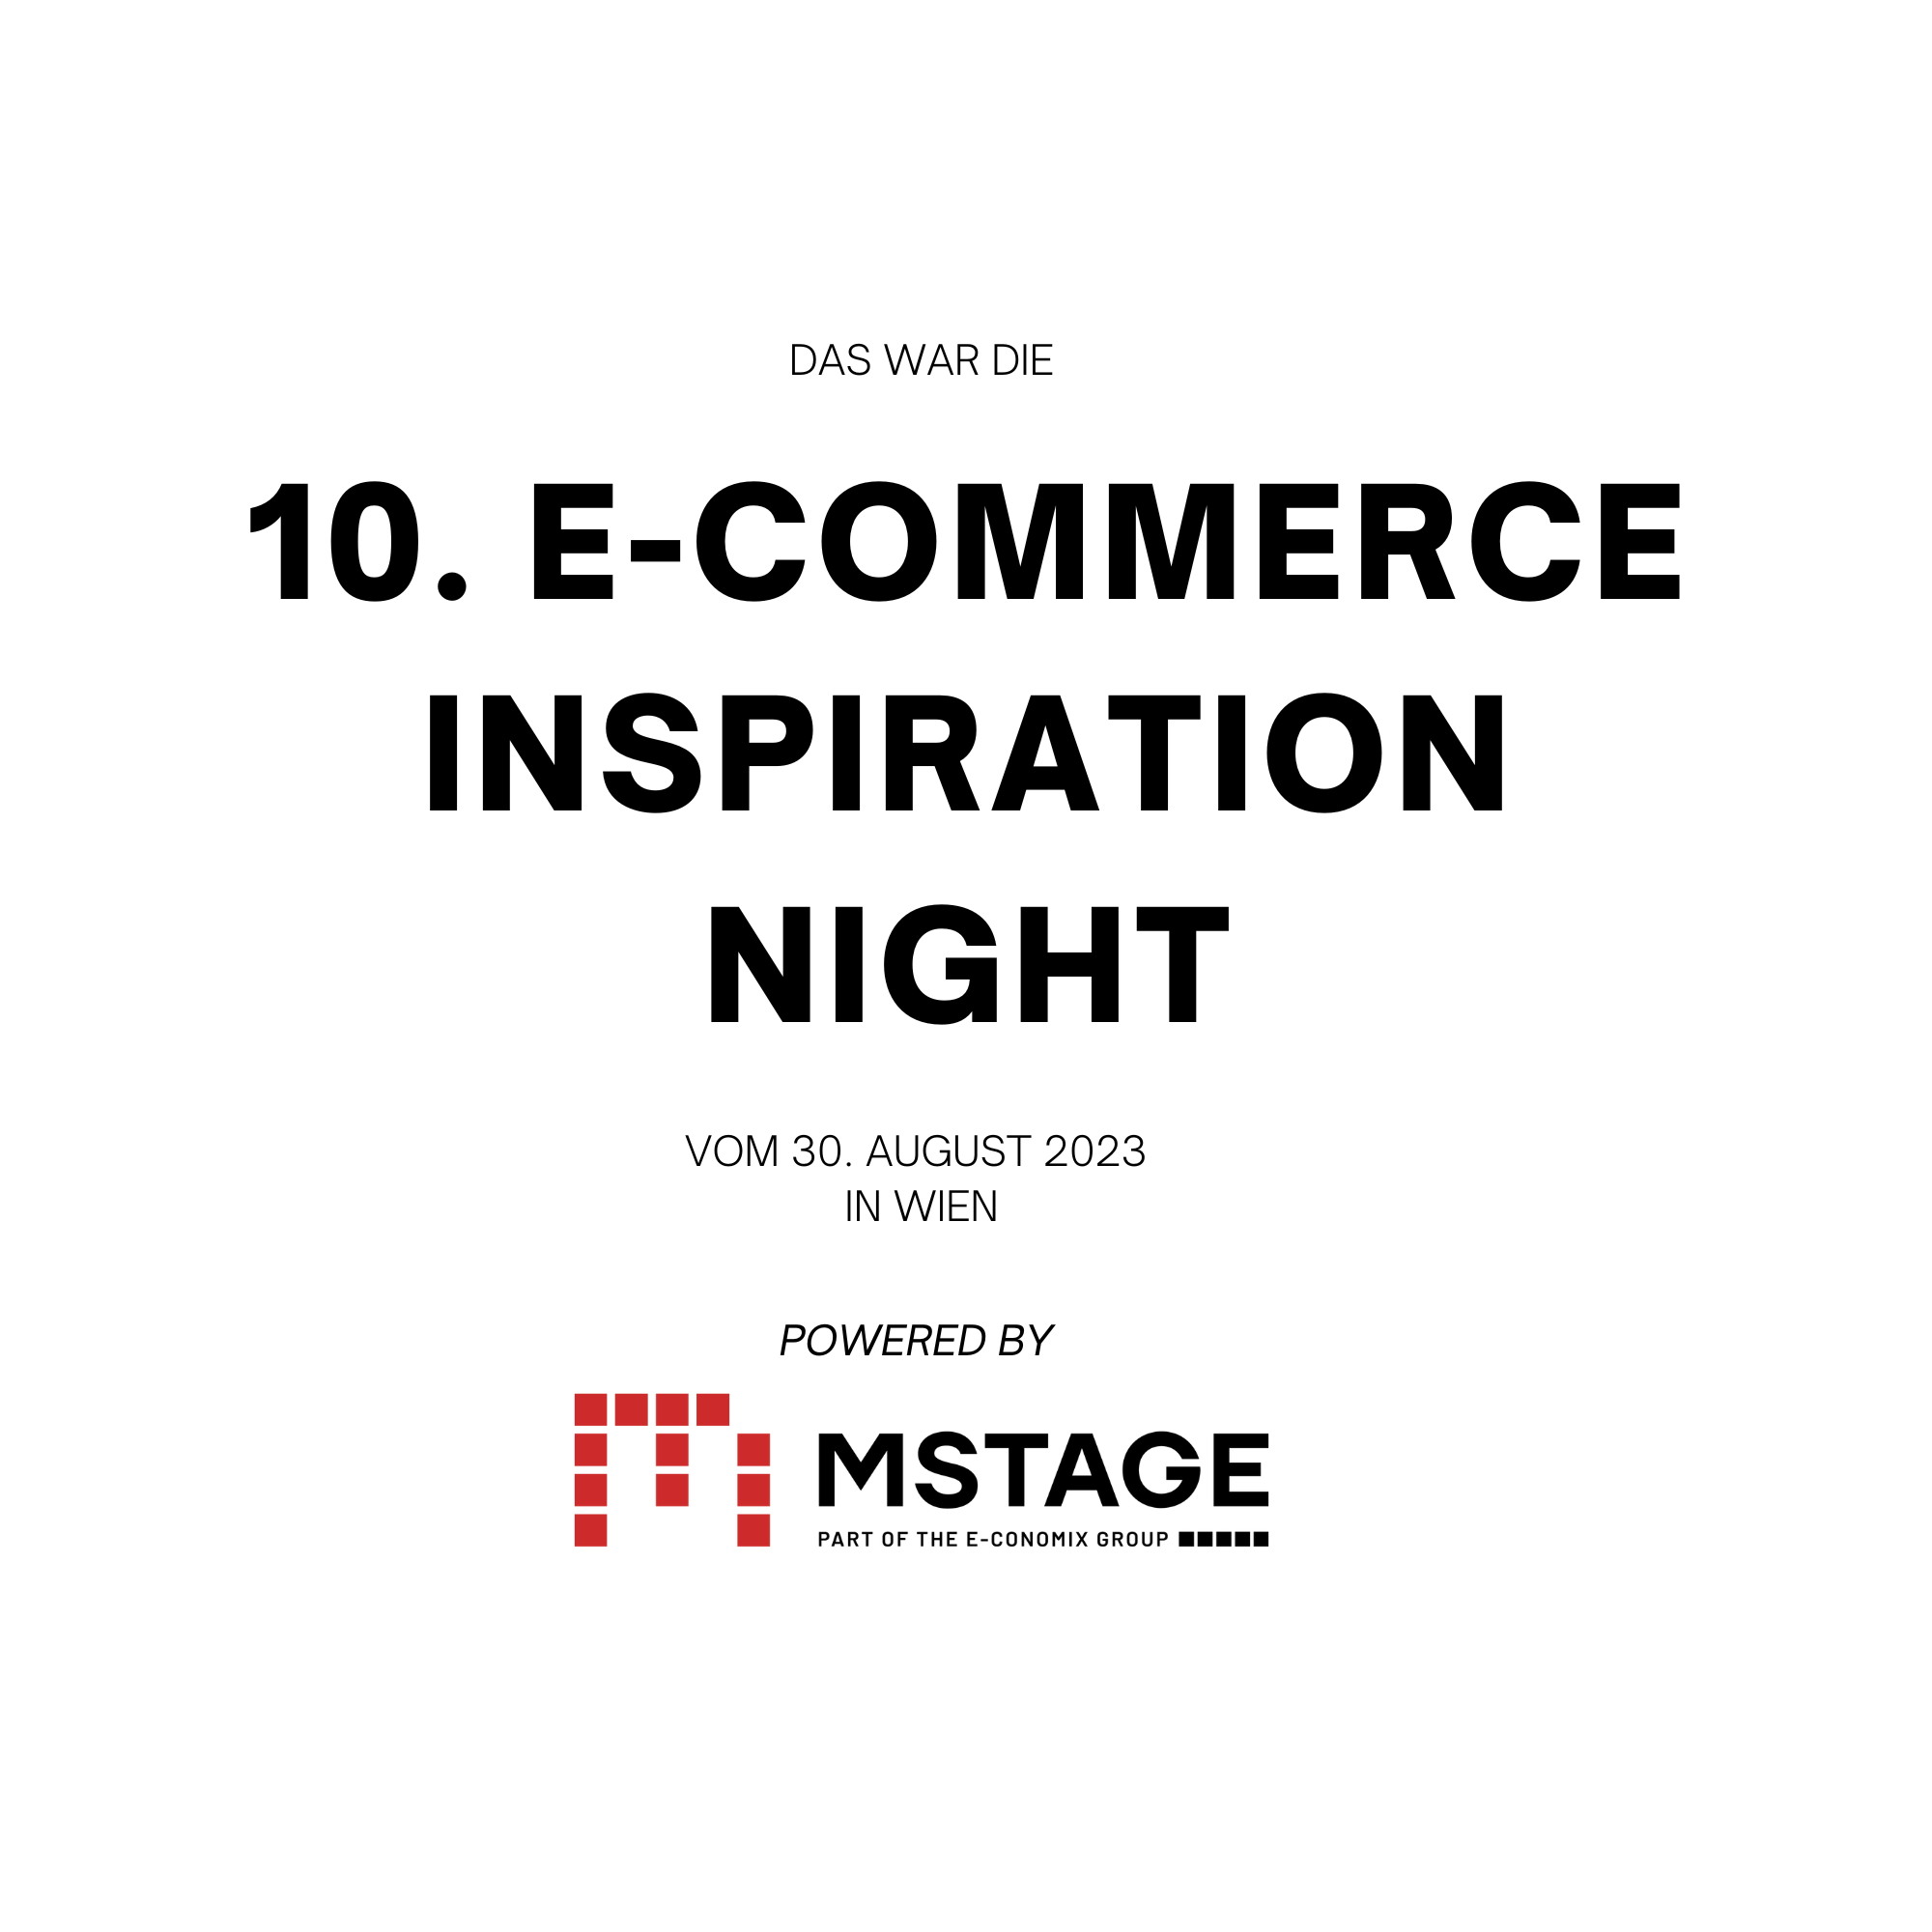 RECAP E-commerce inspiration night 10 vom 30. August 2023 in Wien